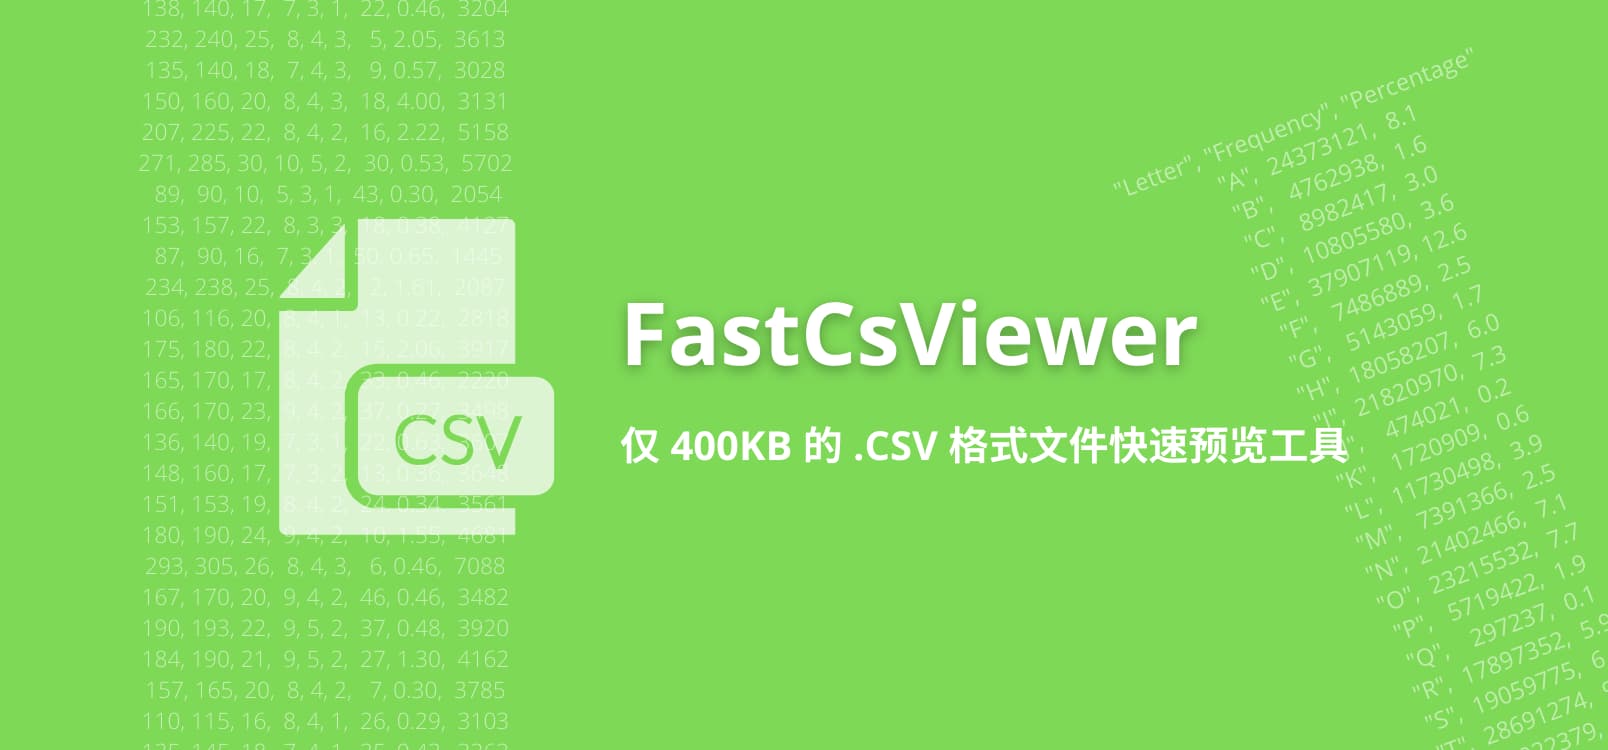 FastCsViewer -  仅 400KB 的 .CSV 格式文件快速预览工具